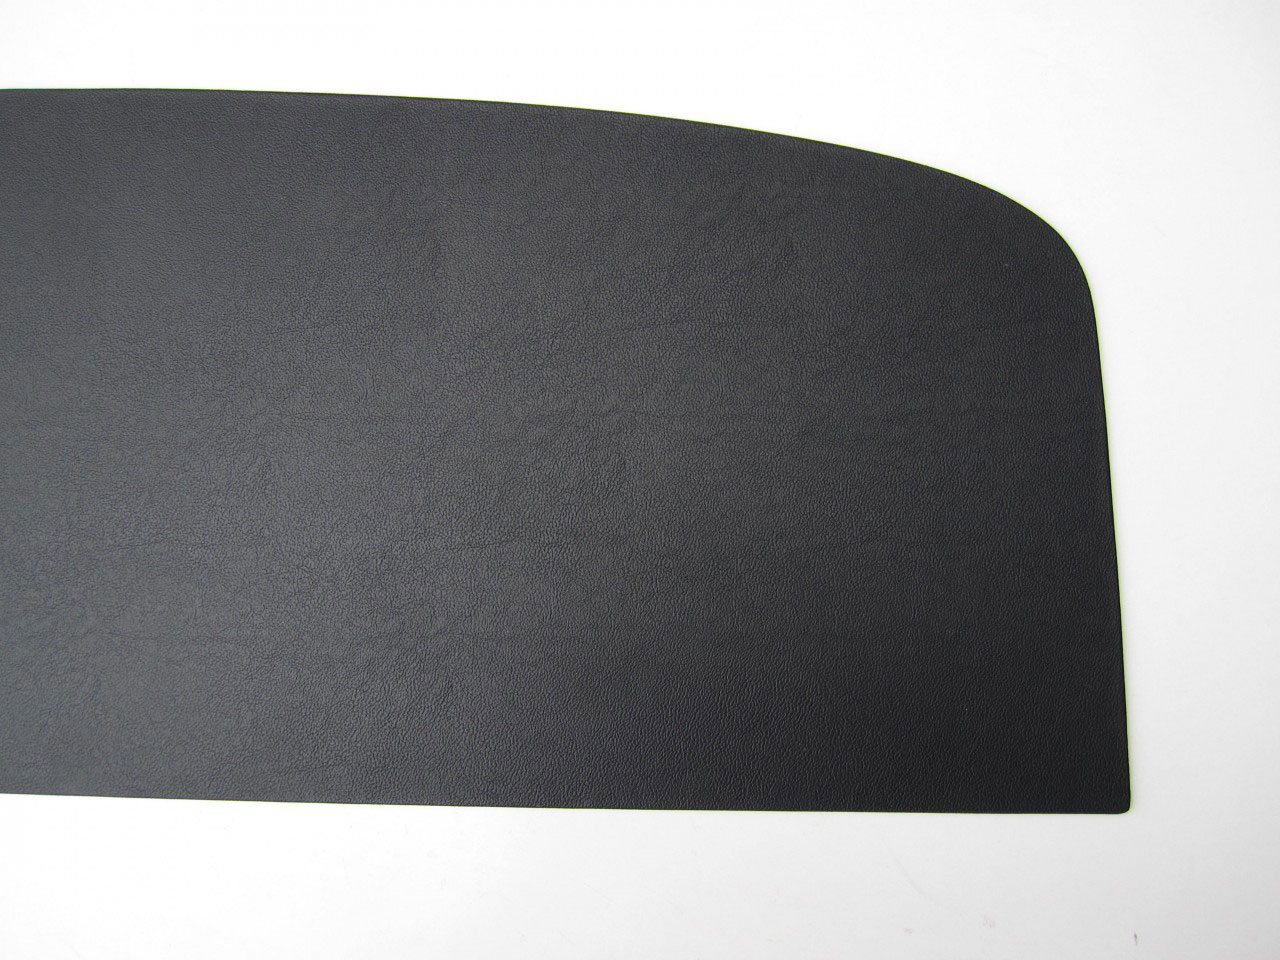 Holden Monaro HK Monaro Coupe 10X Black Parcel Shelf (Image 2 of 7)